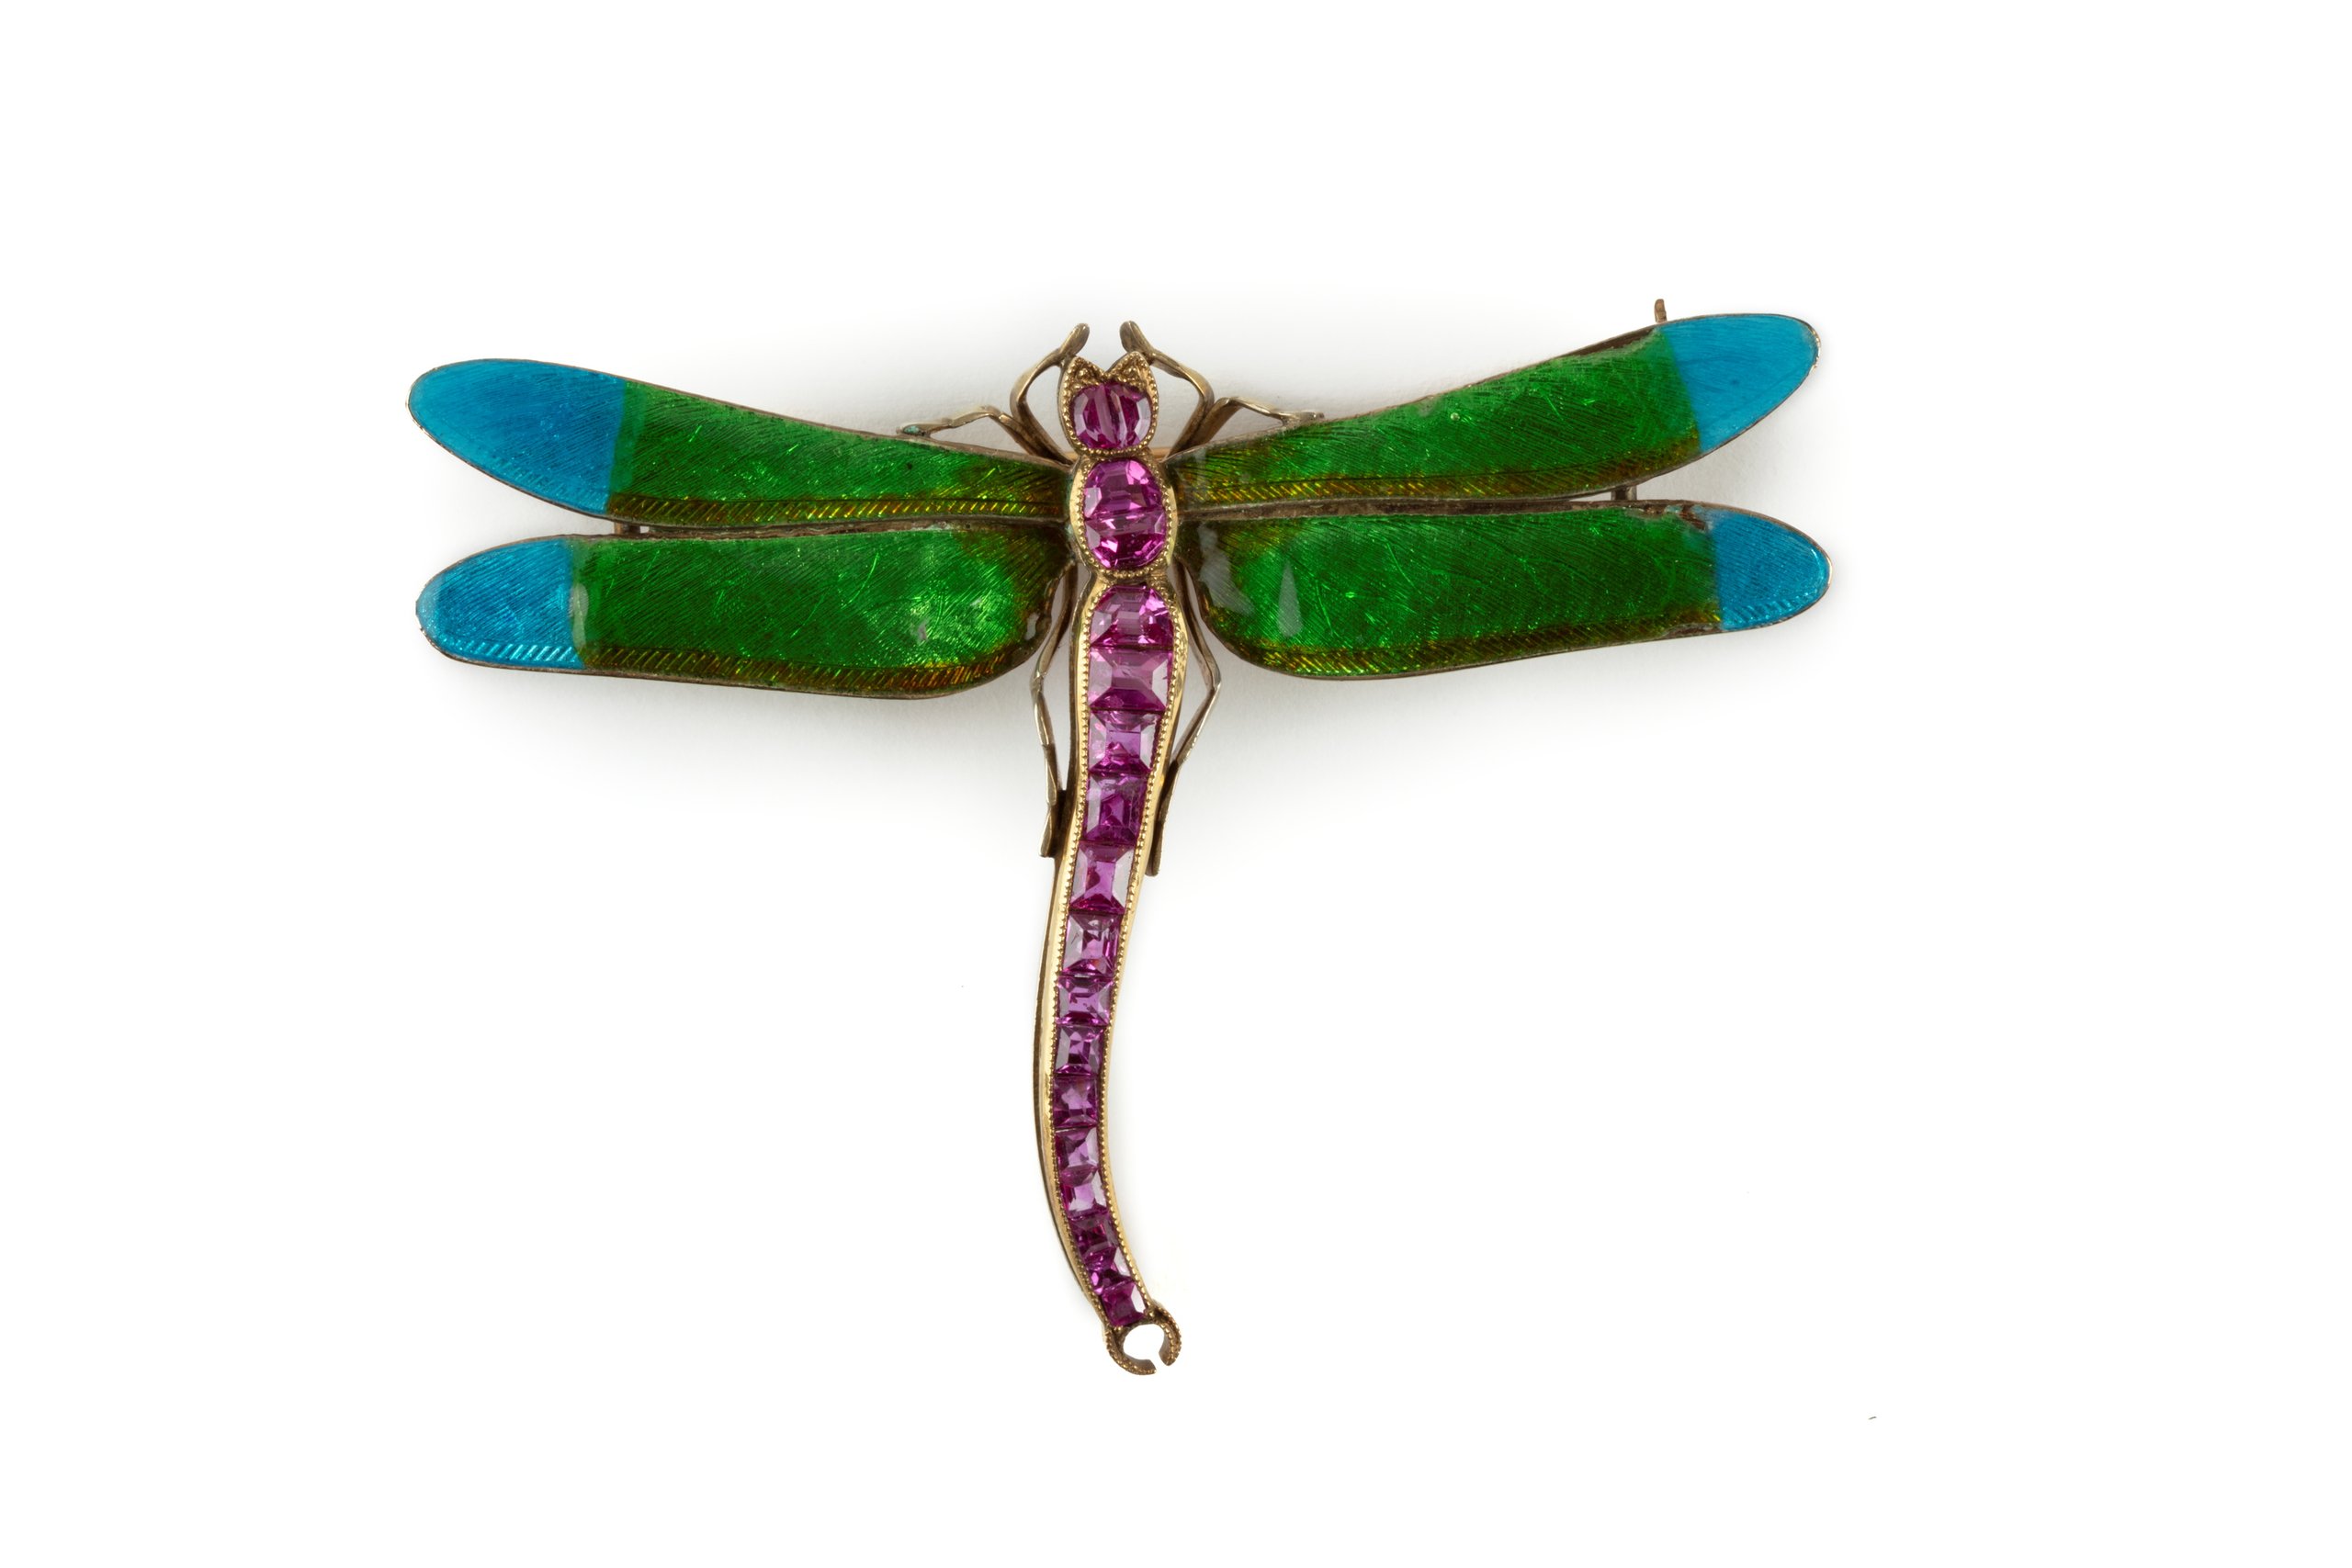 Dragonfly brooch by Child & Child